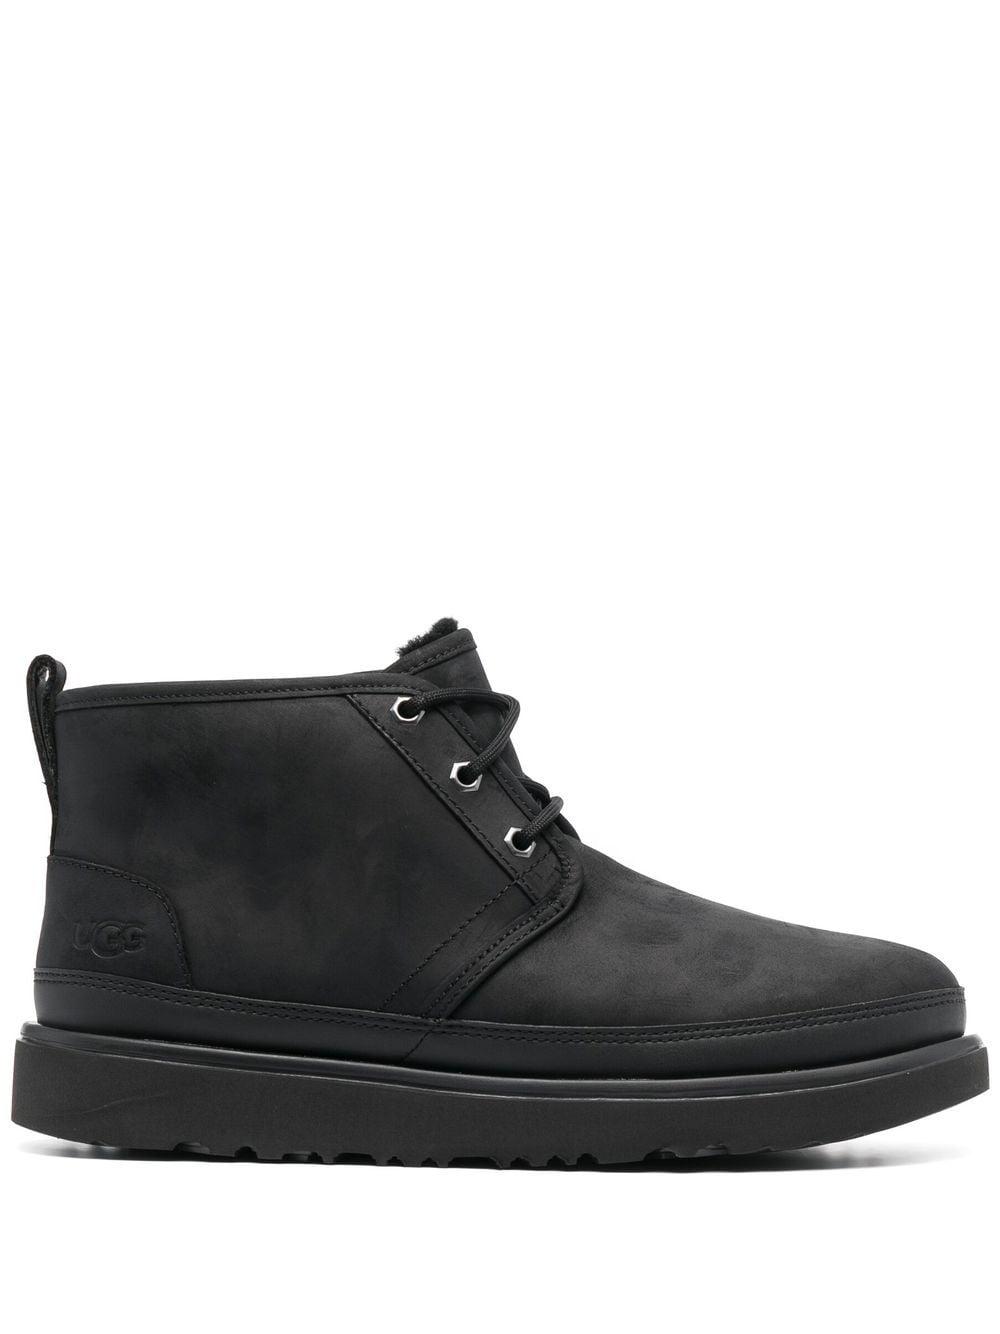 UGG Neumel Lace-up Ankle Boots in Black for Men | Lyst